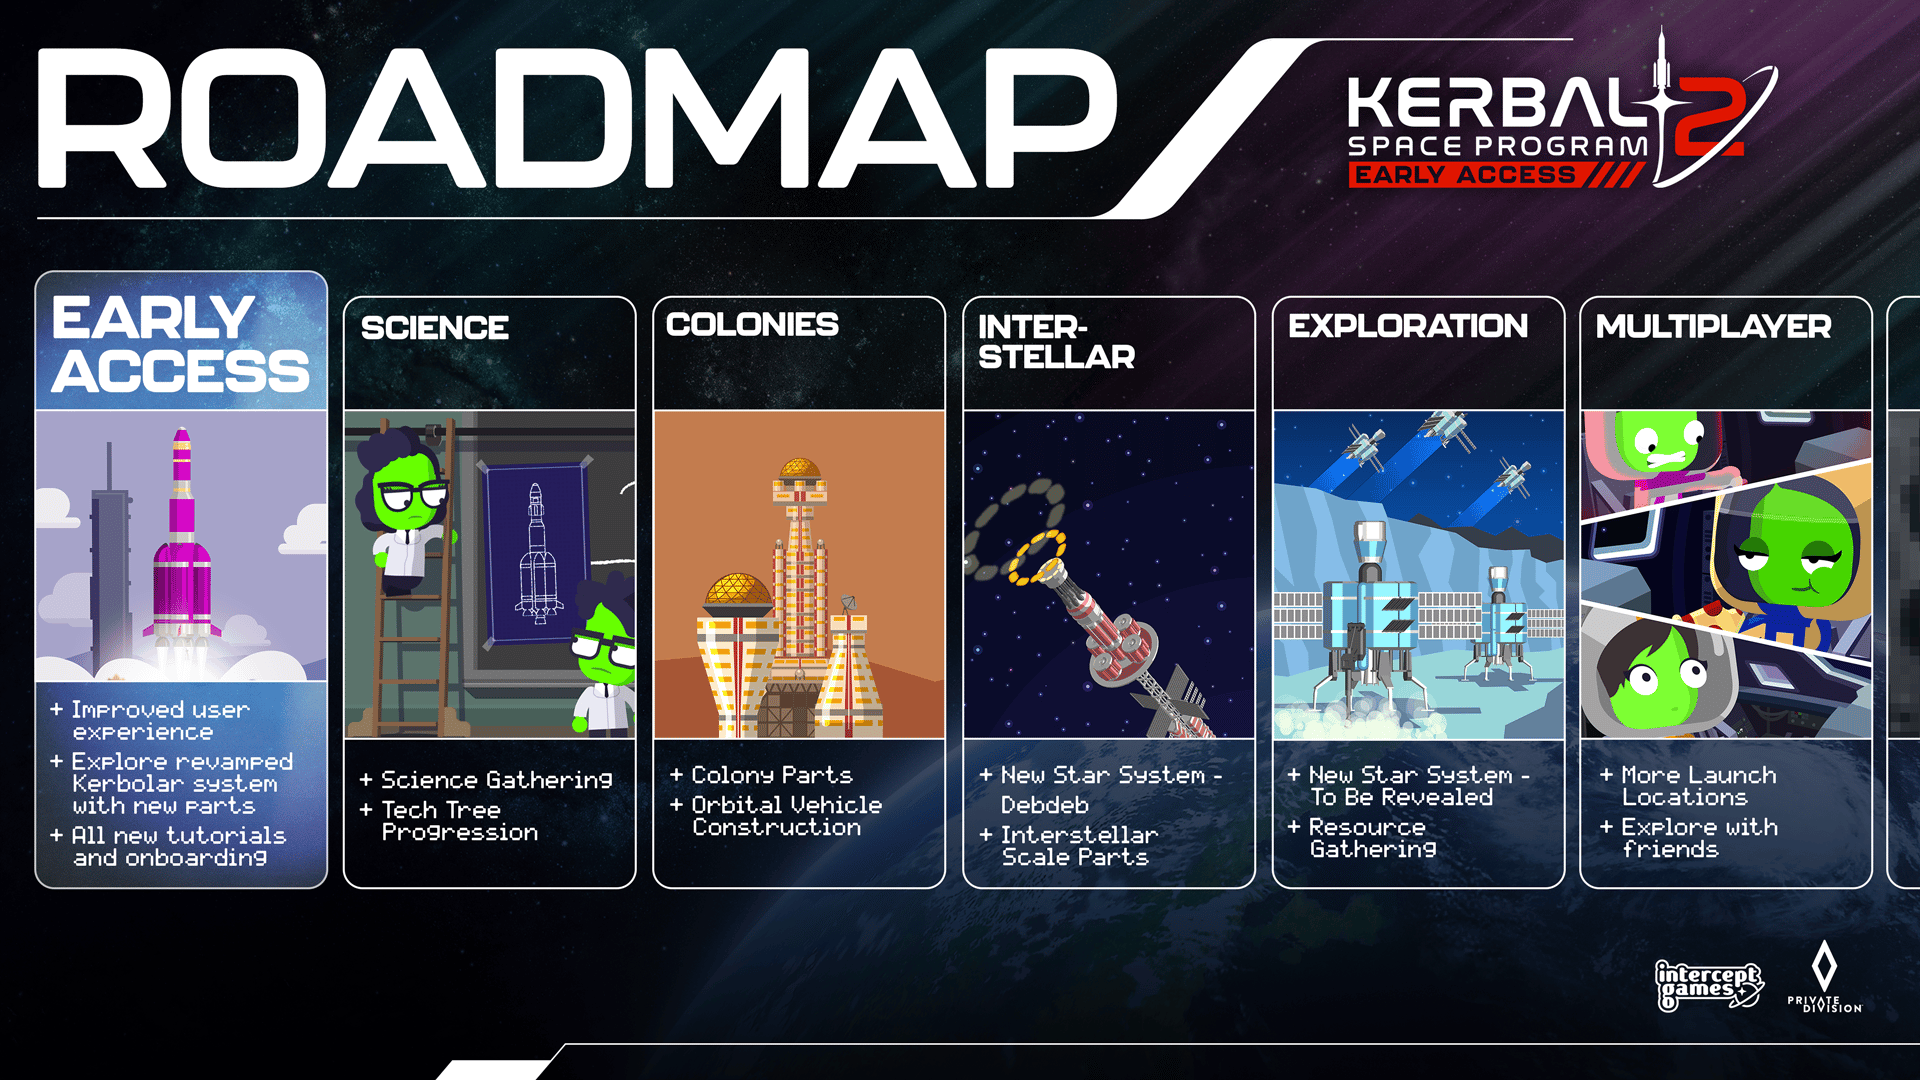 Kerbal Space Program 2 Roadmap